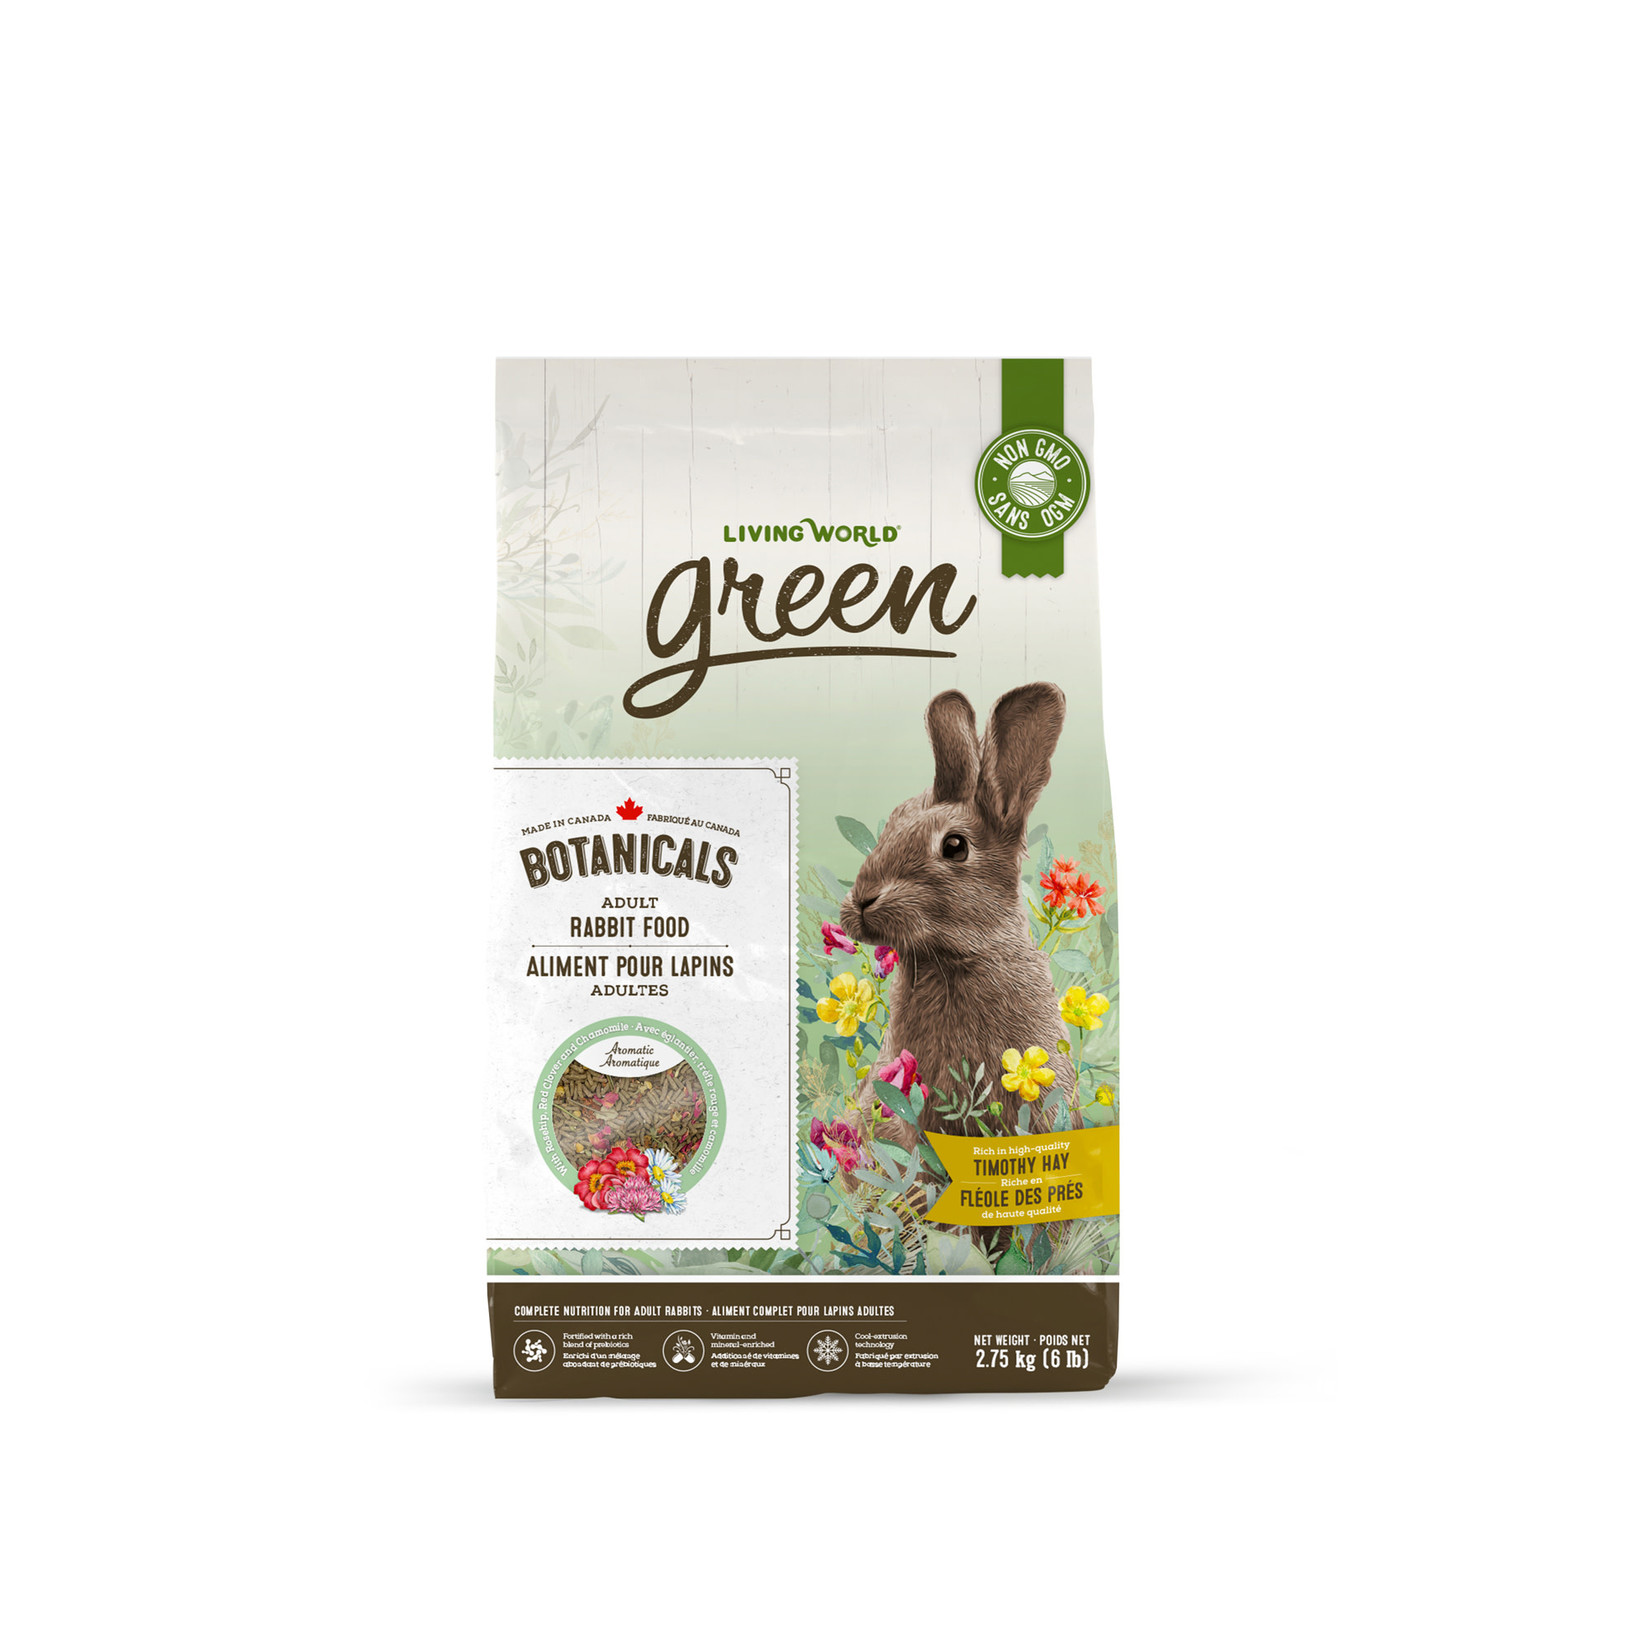 LIVING WORLD Living World Green Botanicals Adult Rabbit Food - 2.75 kg (6 lbs)